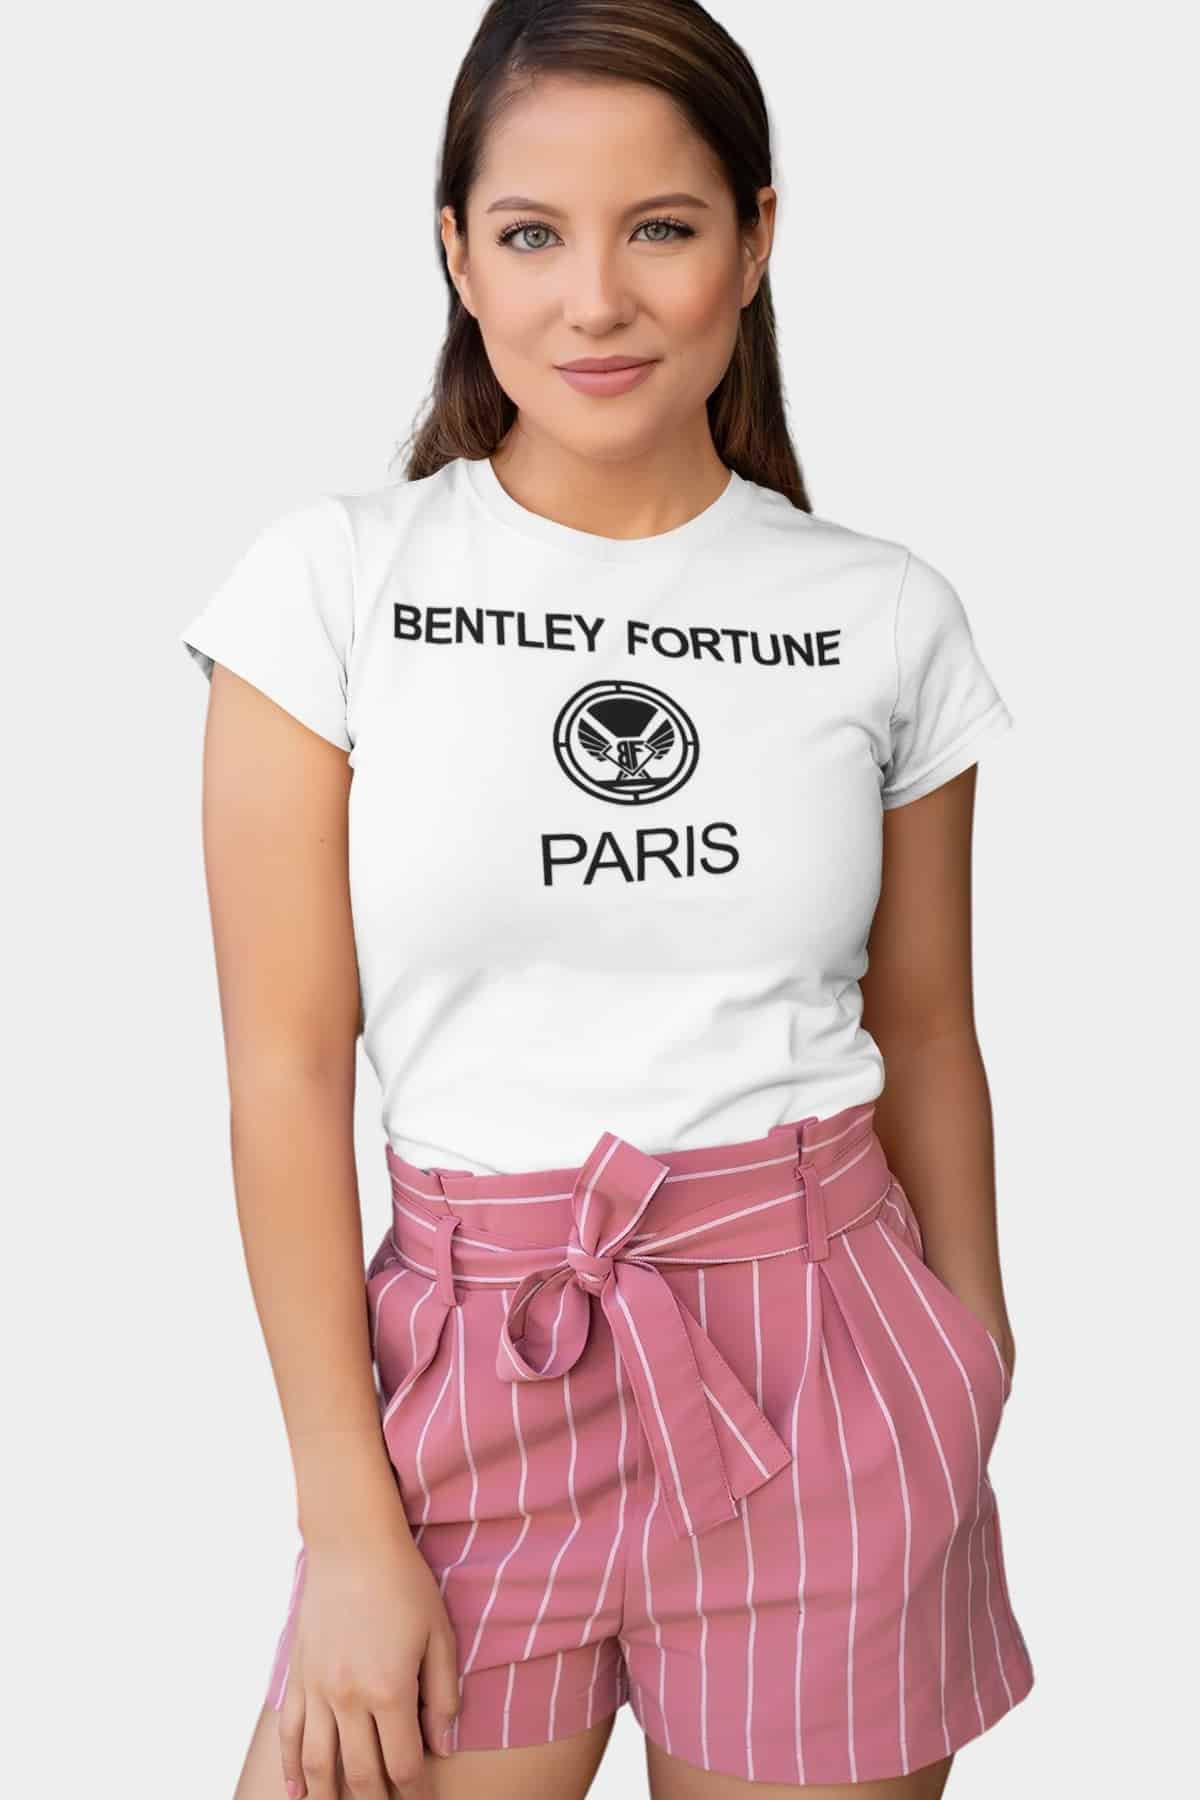 BF Paris T-SHIRT (Women) – Bentley Fortune